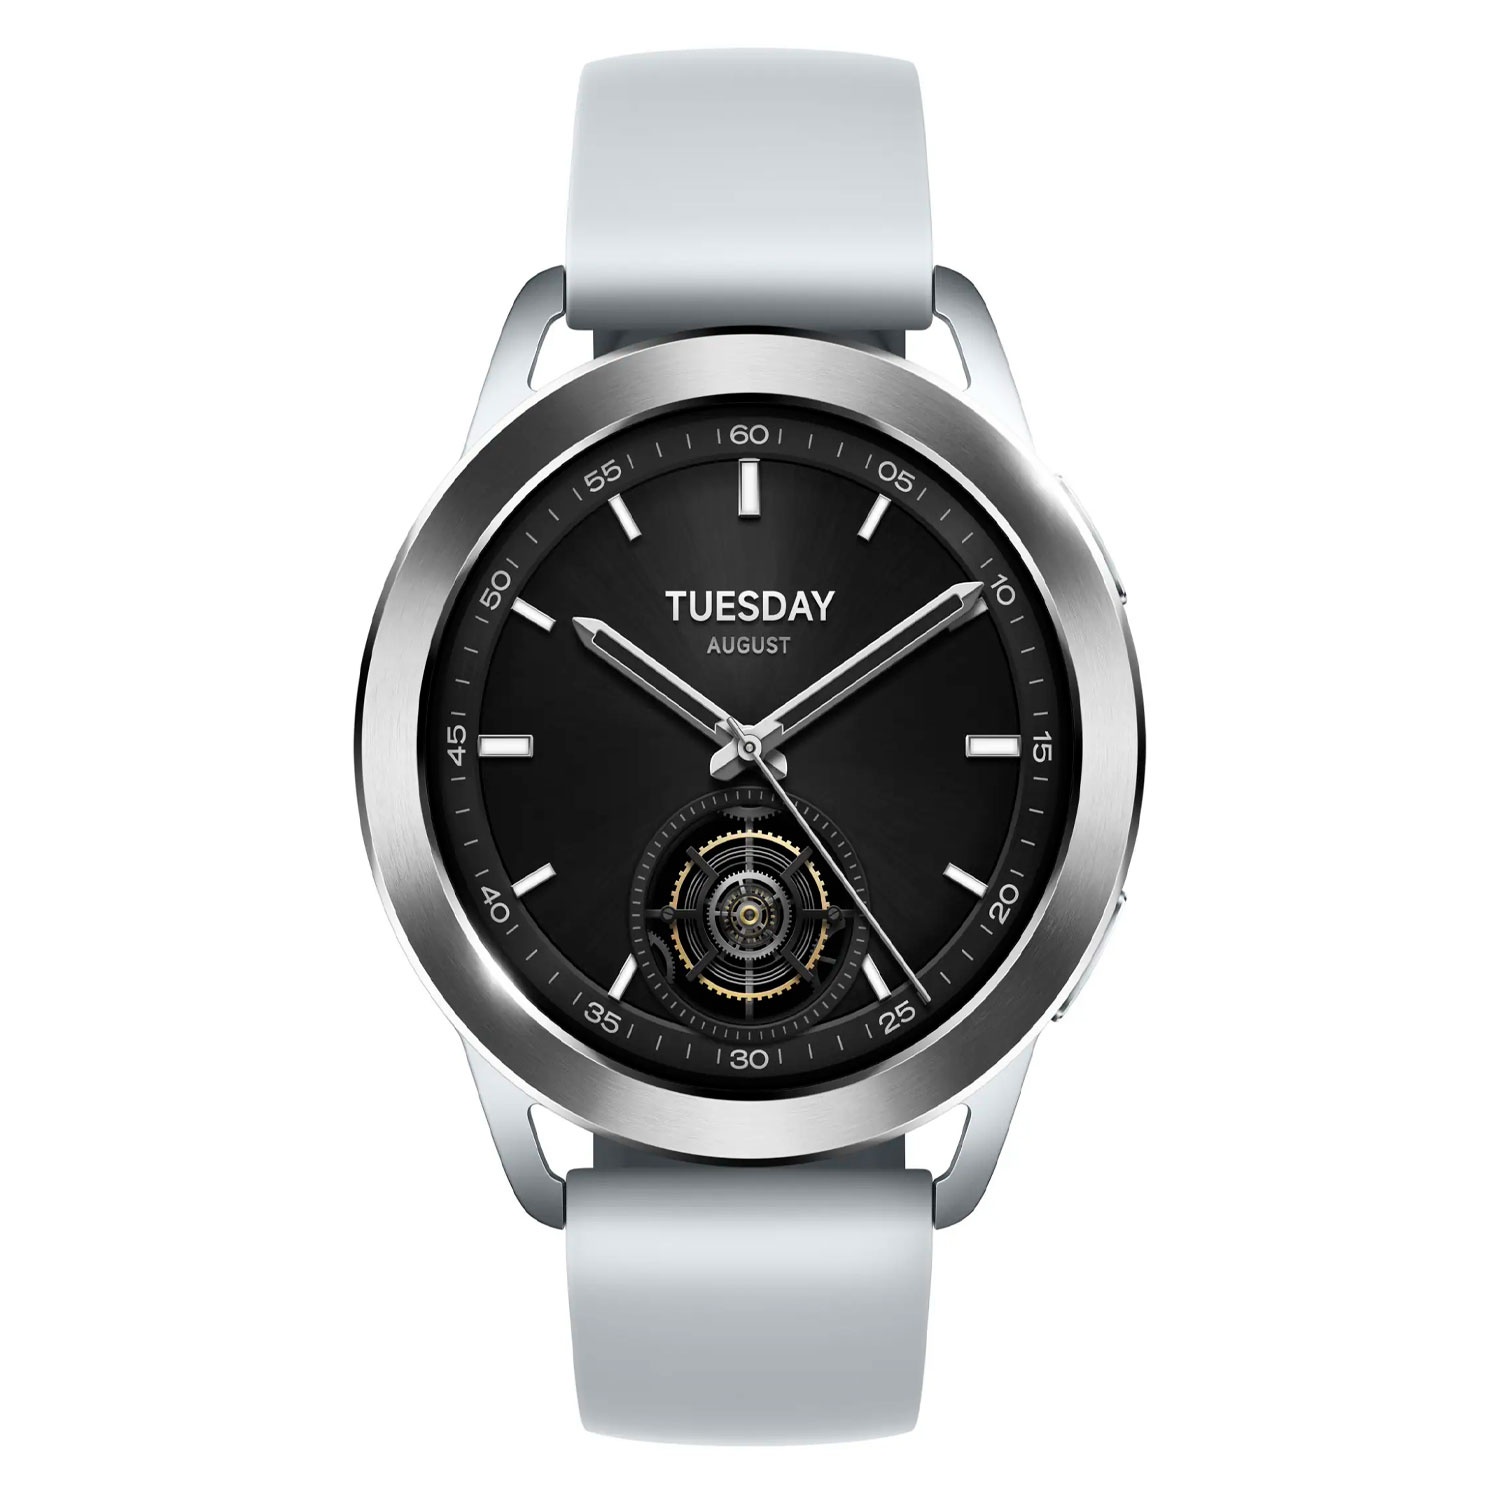 Smartwatch Xiaomi Watch S3 BHR7873GL - Prata